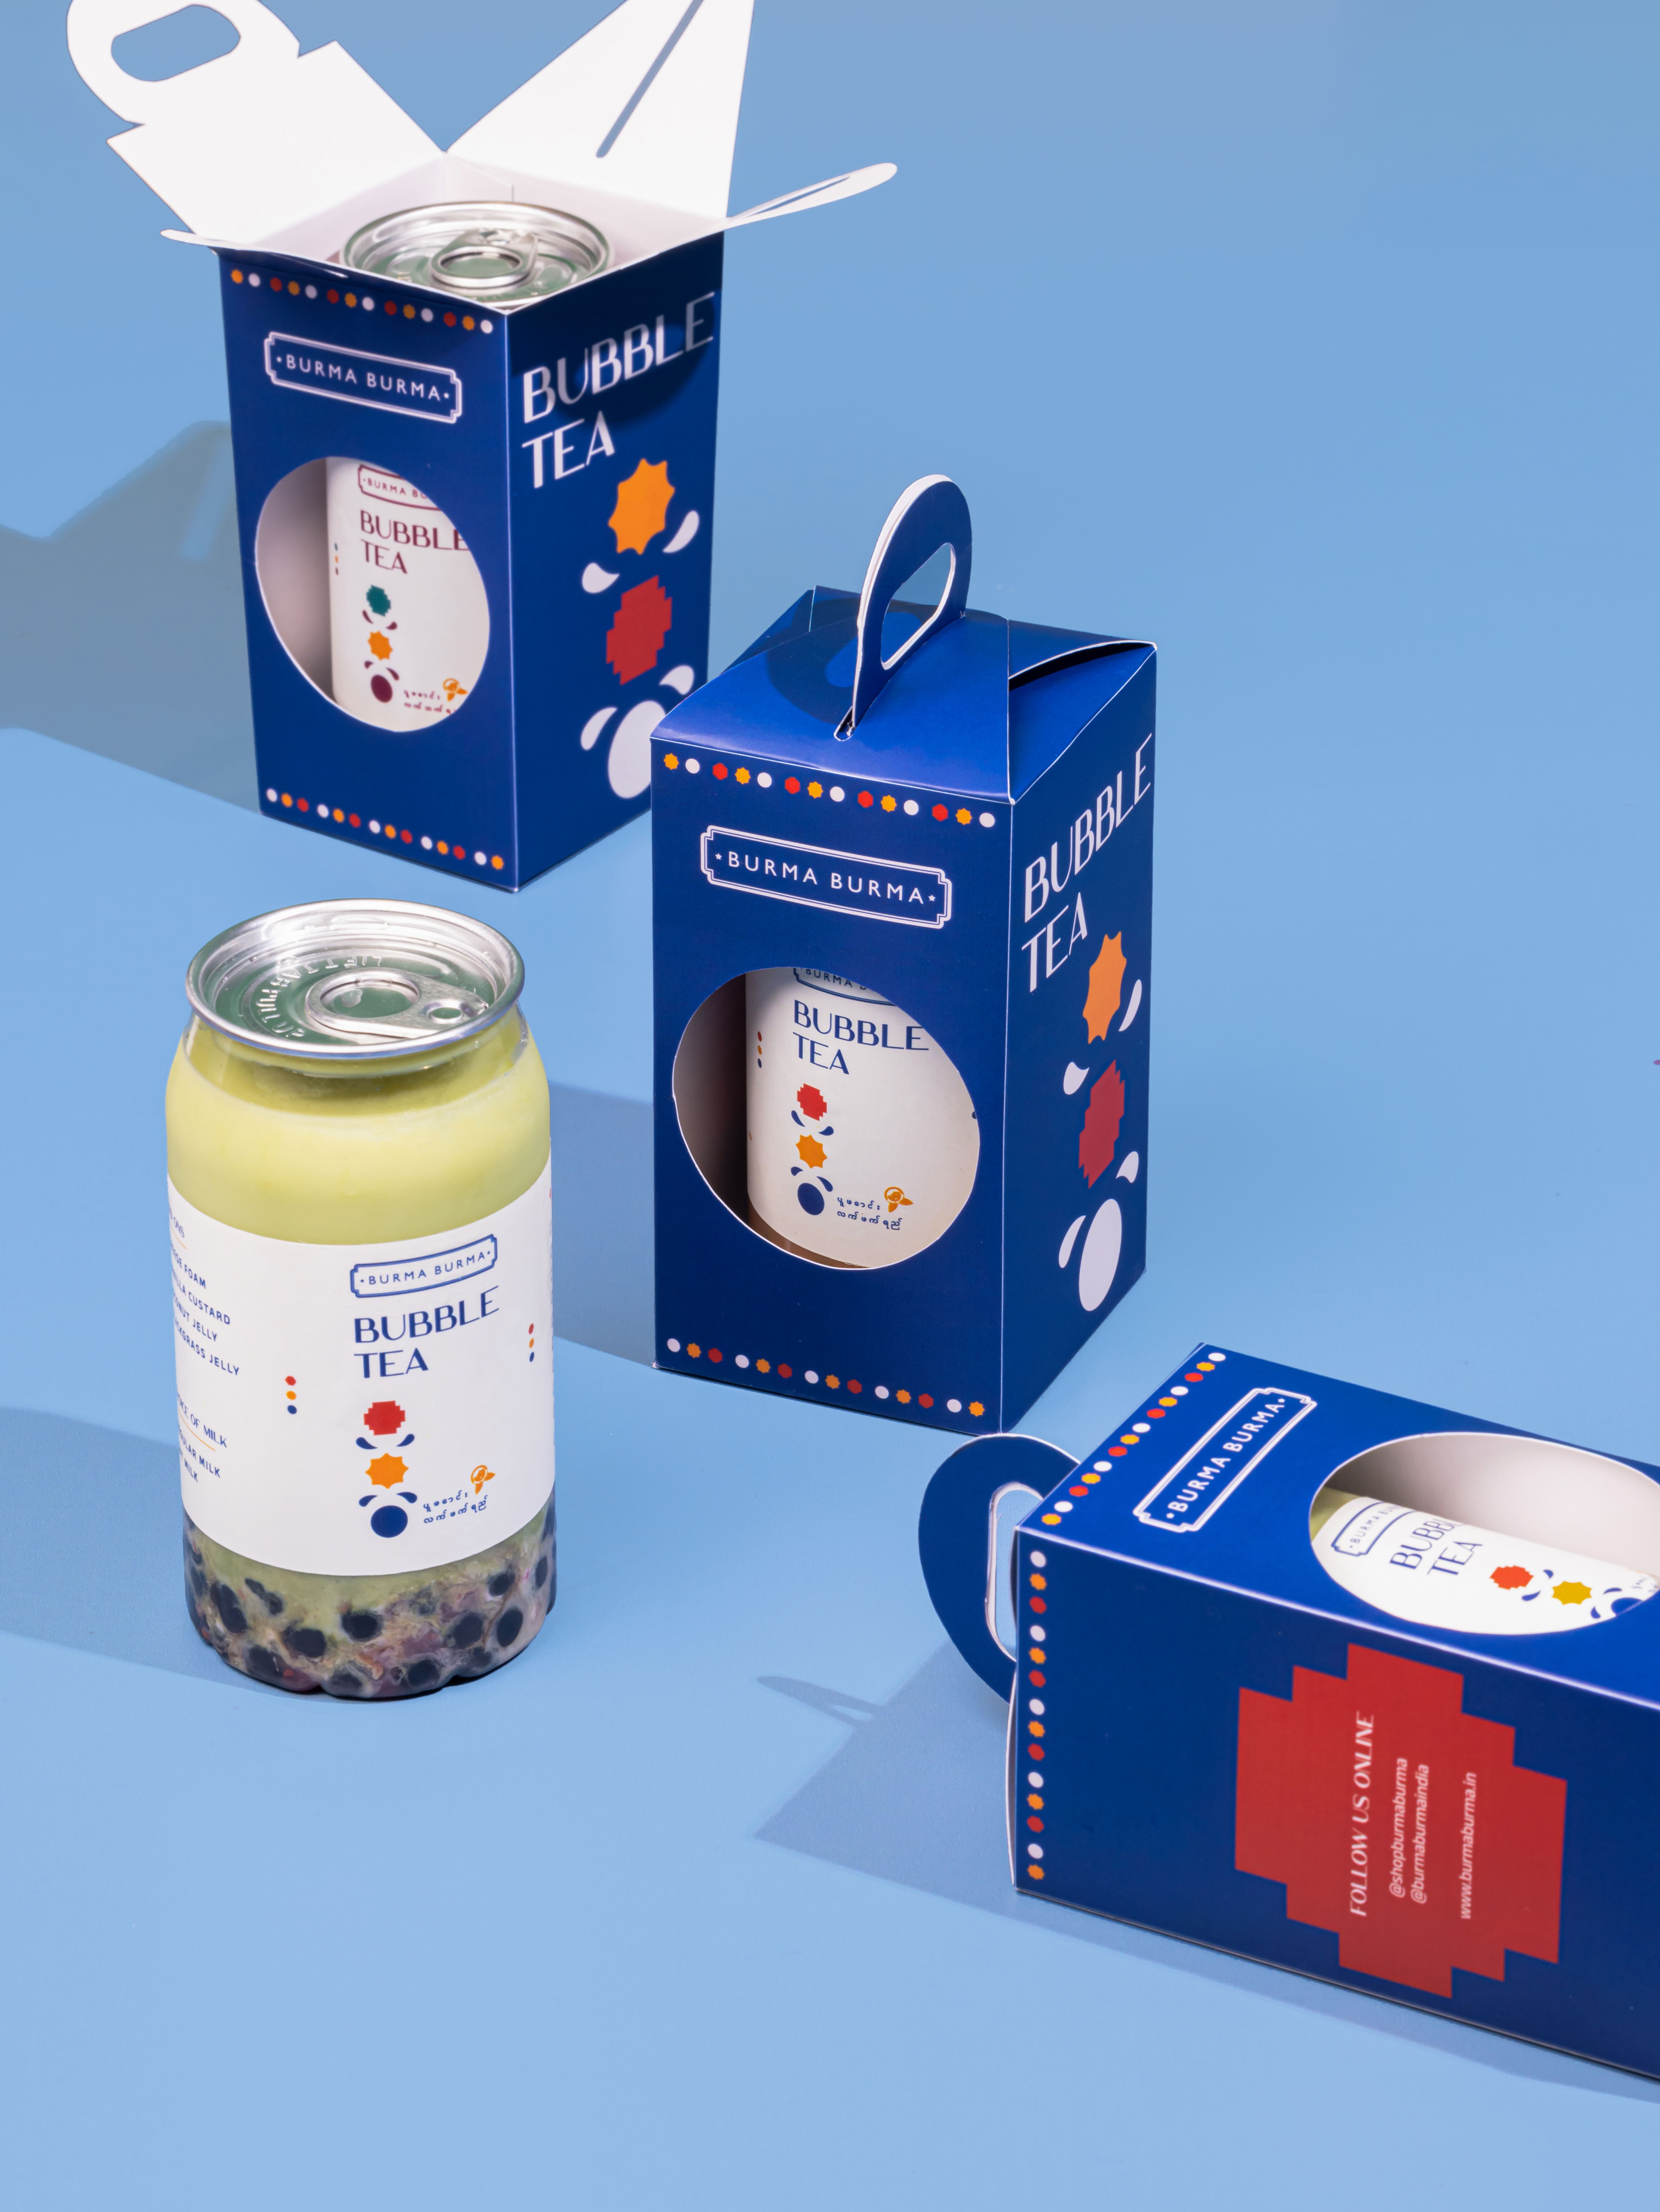 Burma Burma Welcomes Summer with New Bubble Tea Packaging Design Created by Rushil Bhatnagar